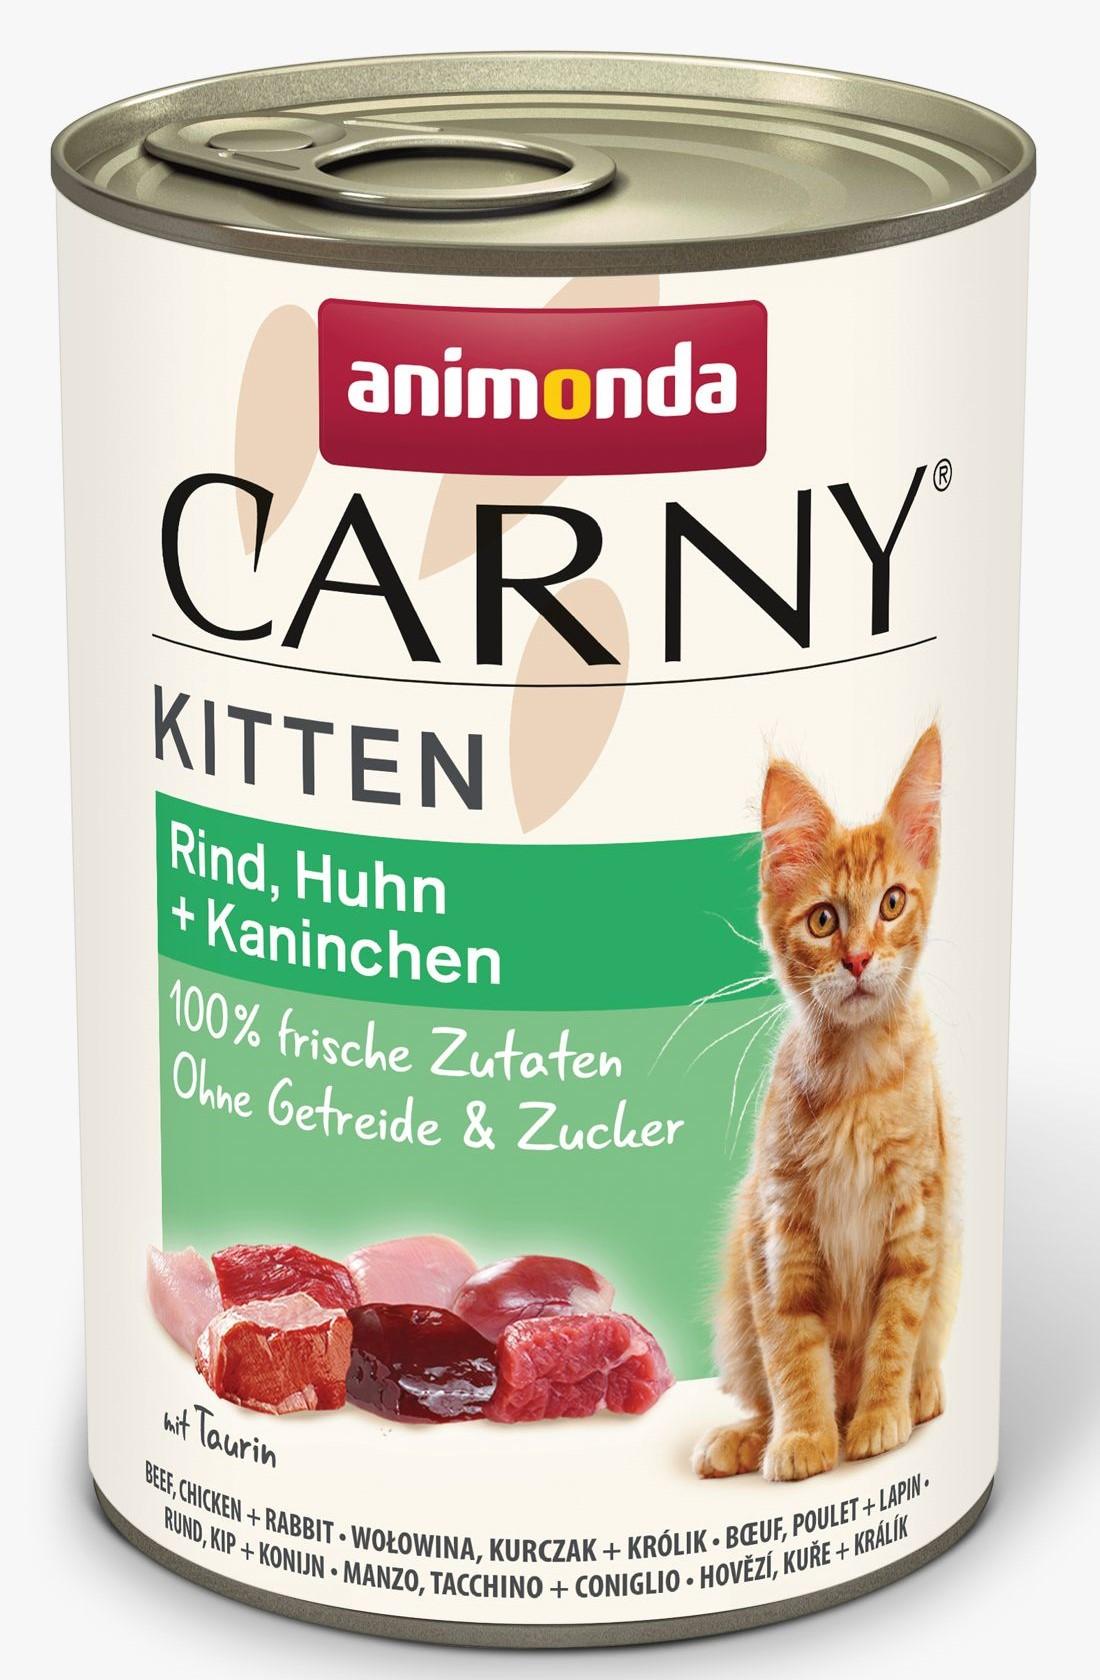 Animonda Carny Kitten Beef, Chicken and Rabbit